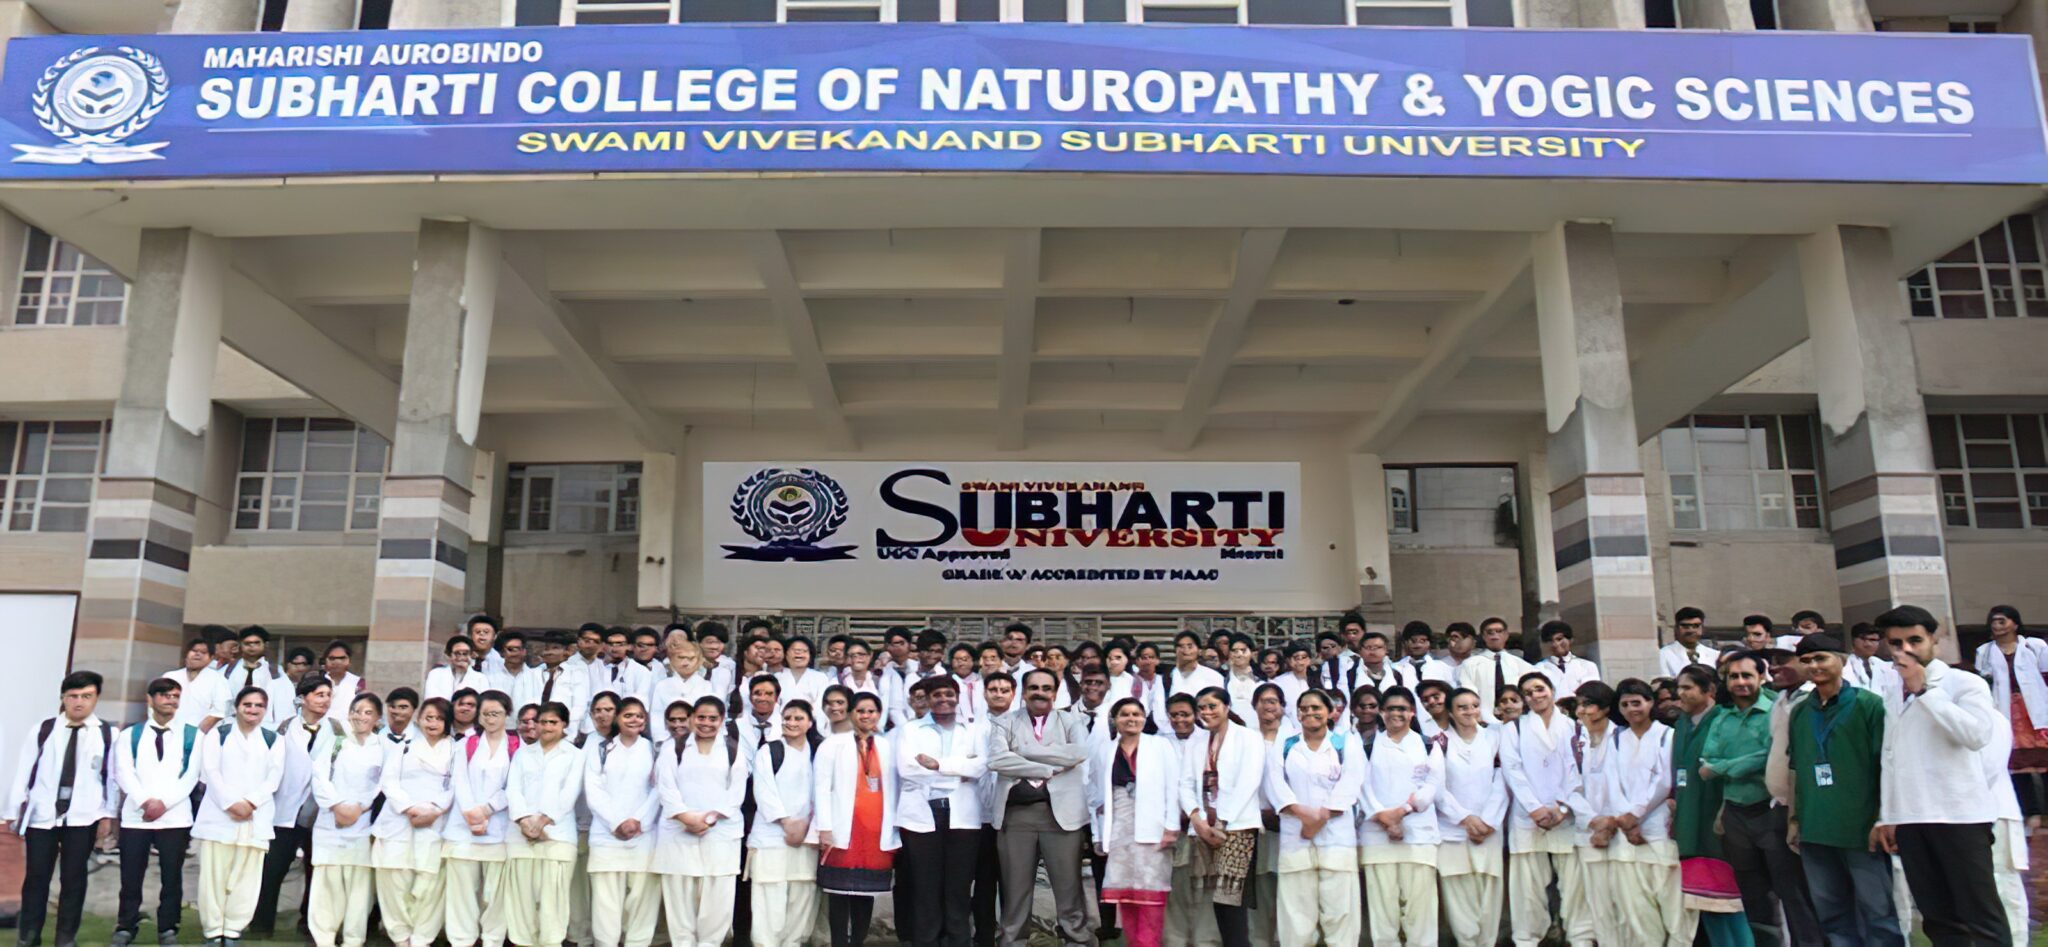 Maharishi Aurobindo Subharti College of Naturopathy Meerut Admission, Courses, Eligibility, Fees, Facilities